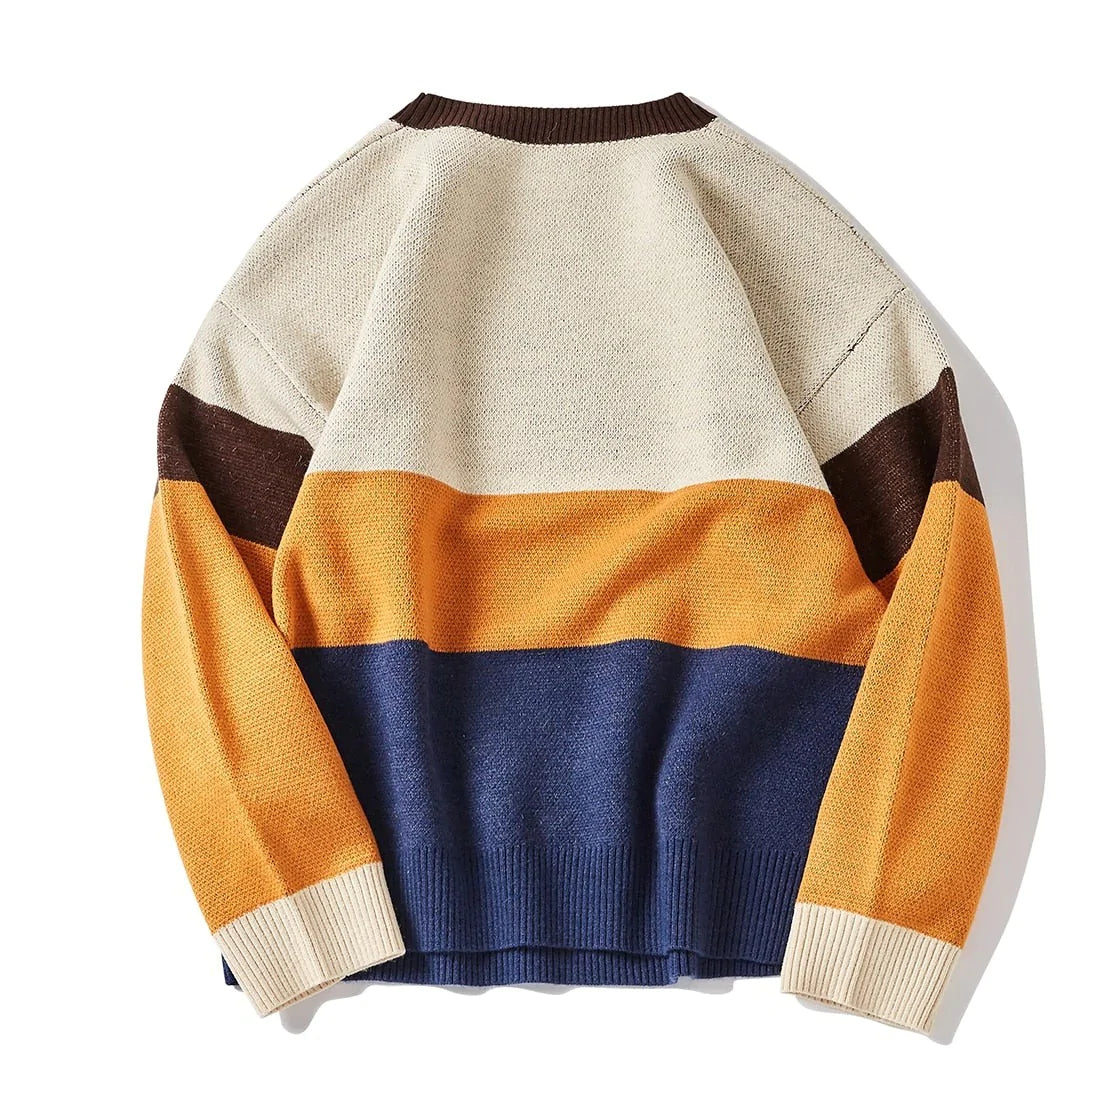  Reunion Cat Sweater sold by Fleurlovin, Free Shipping Worldwide